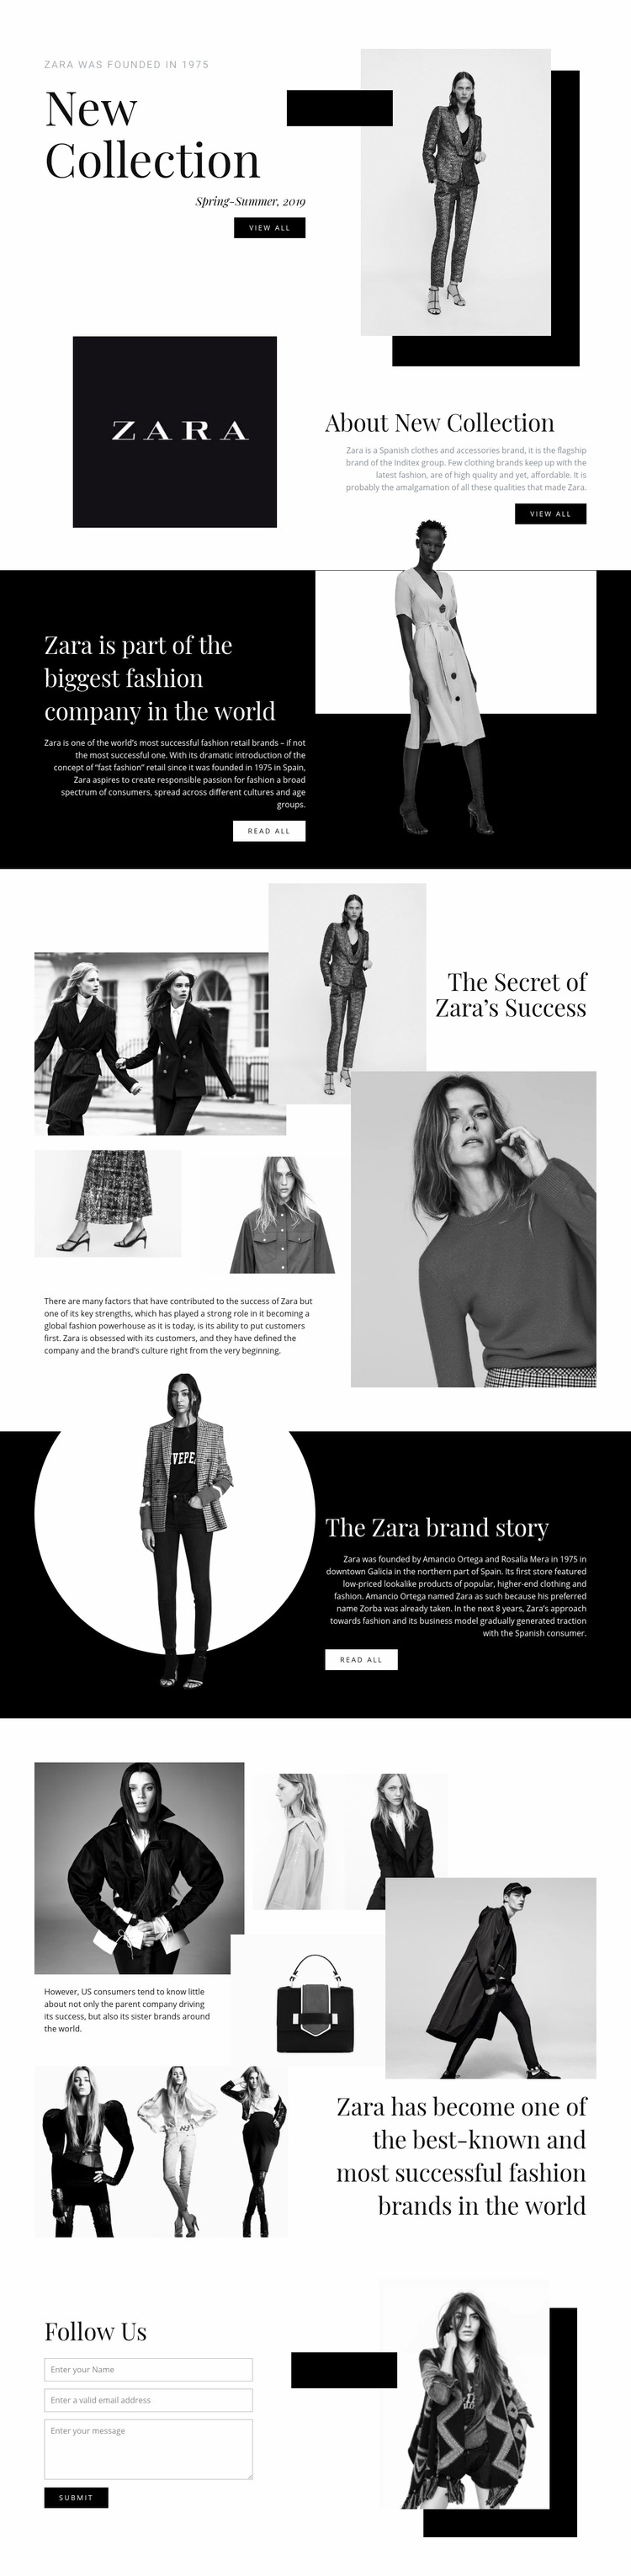 zara us official website